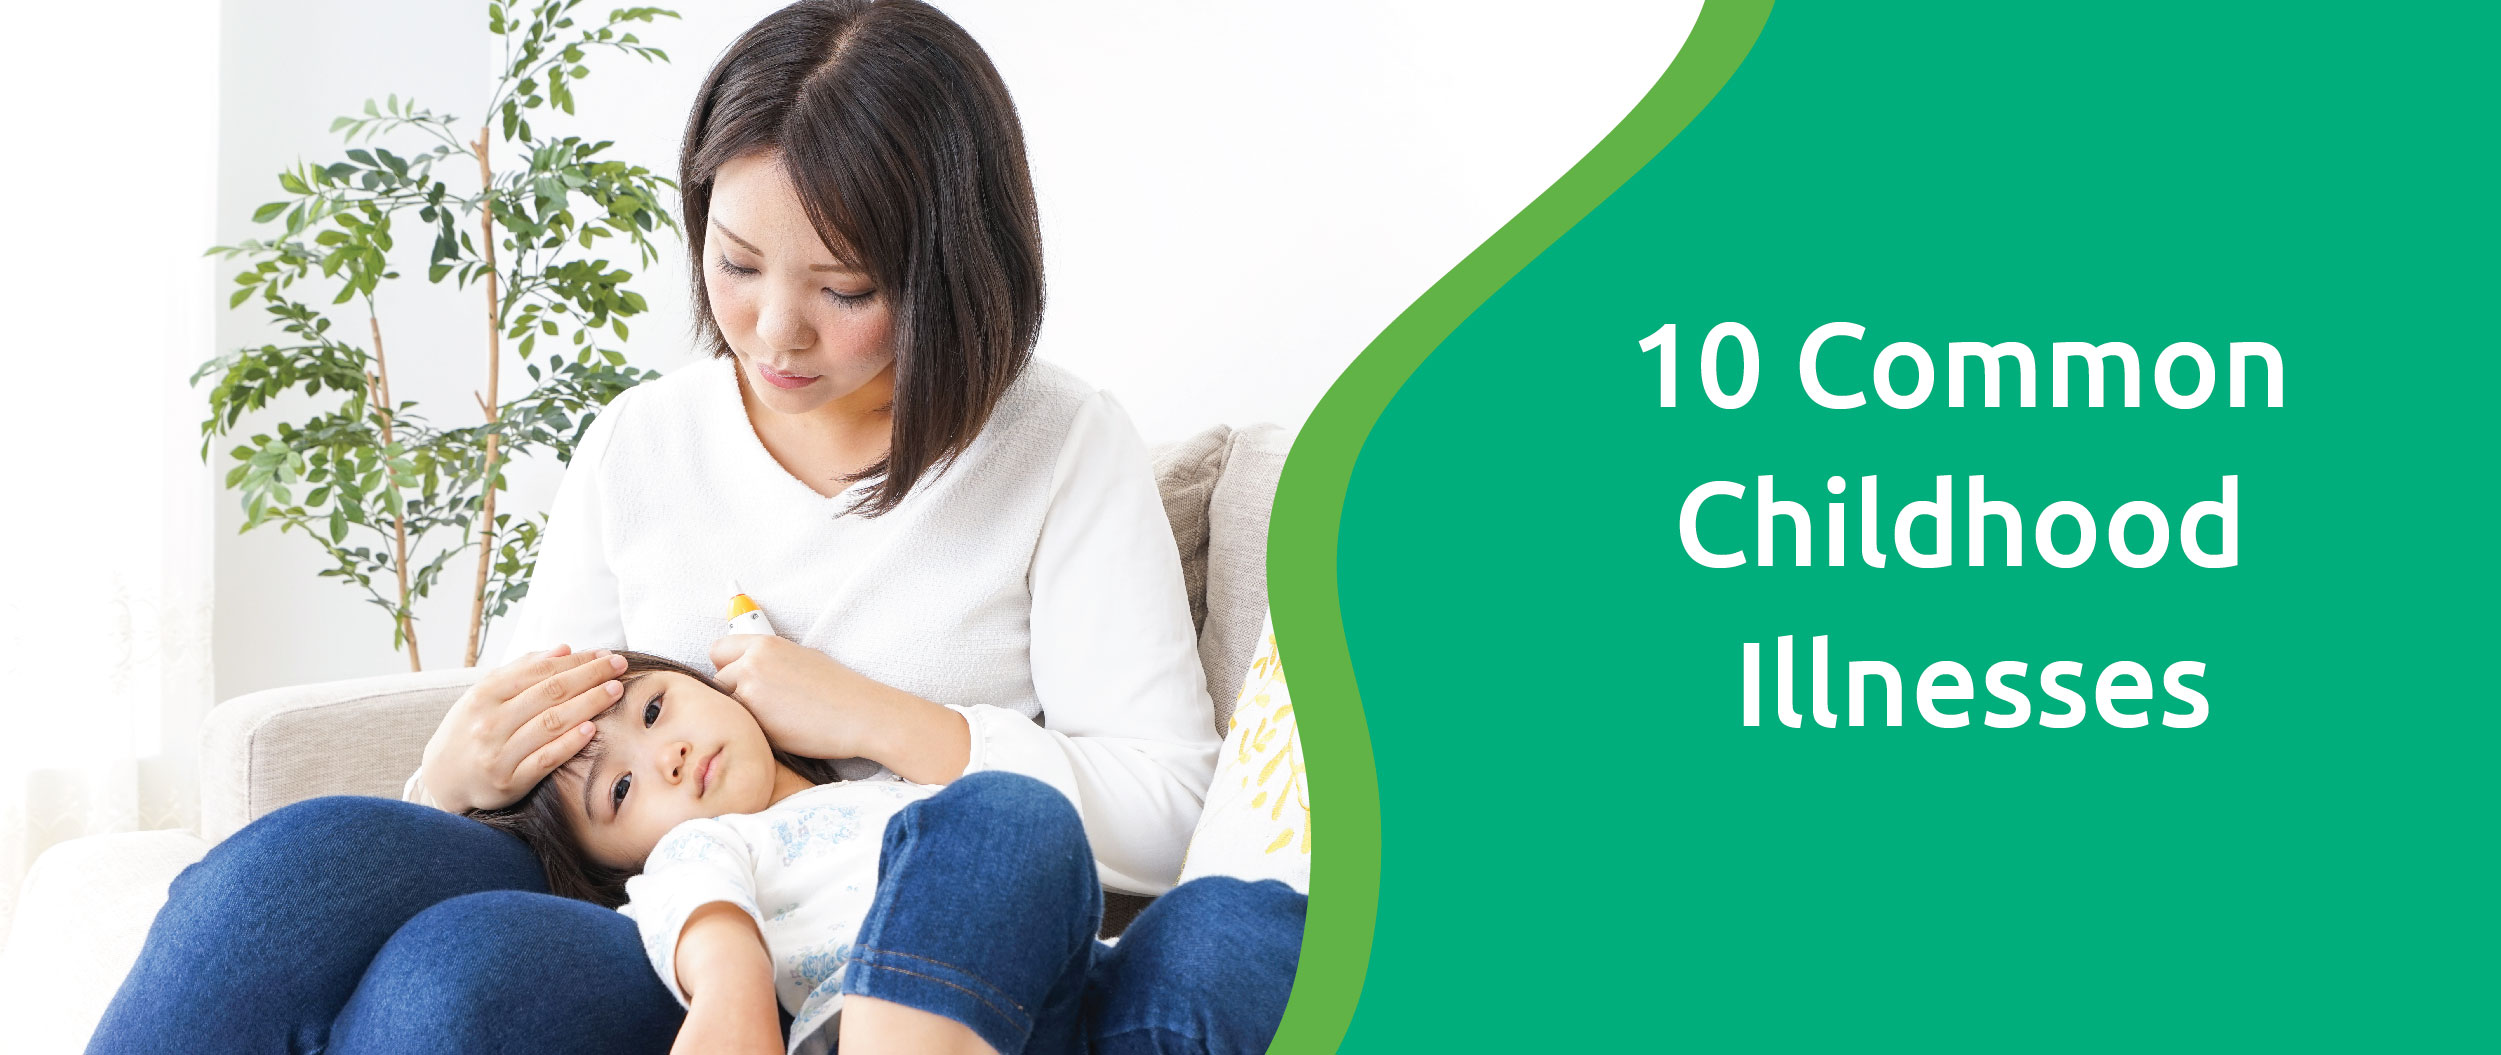 10 common childhood illnesses